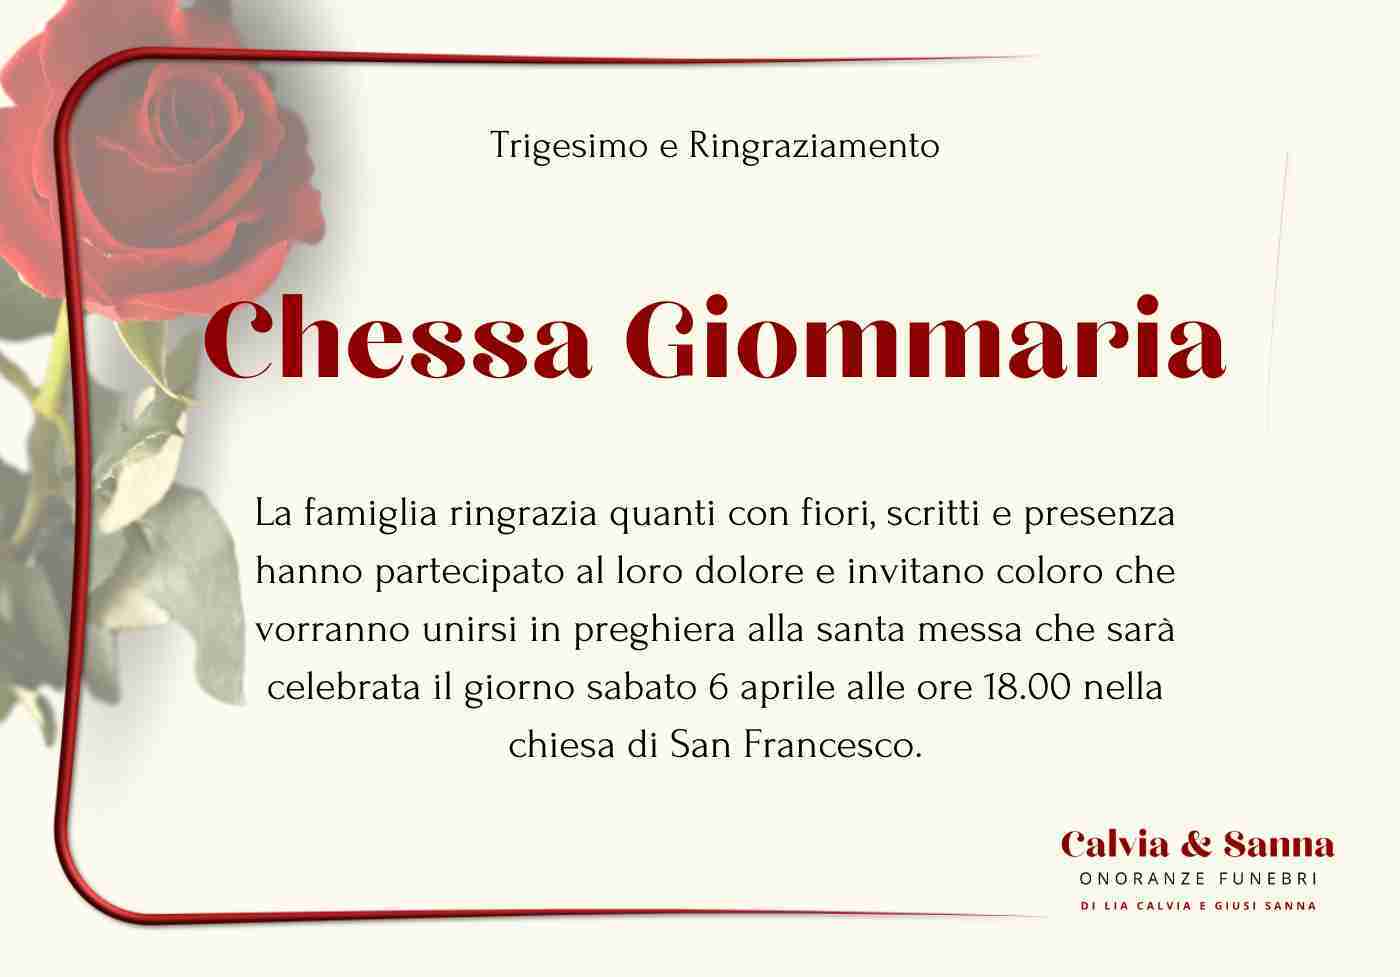 Chessa Giommaria